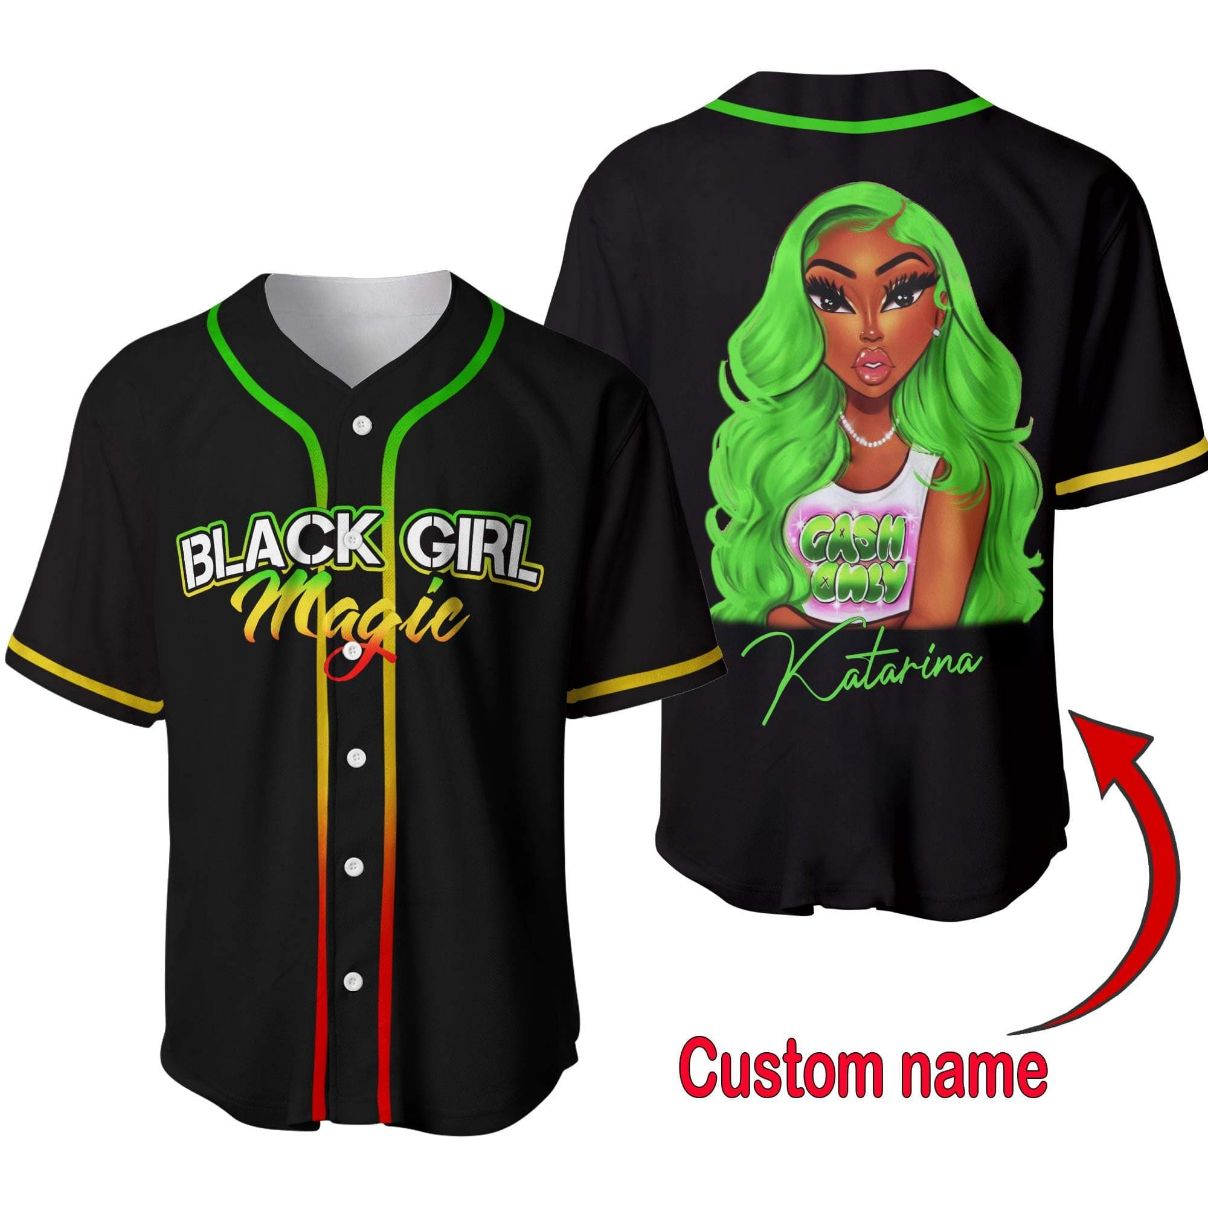 Black Girl Magic Cash Only Custom Personalized Name &ampamp Image Baseball Jersey kv